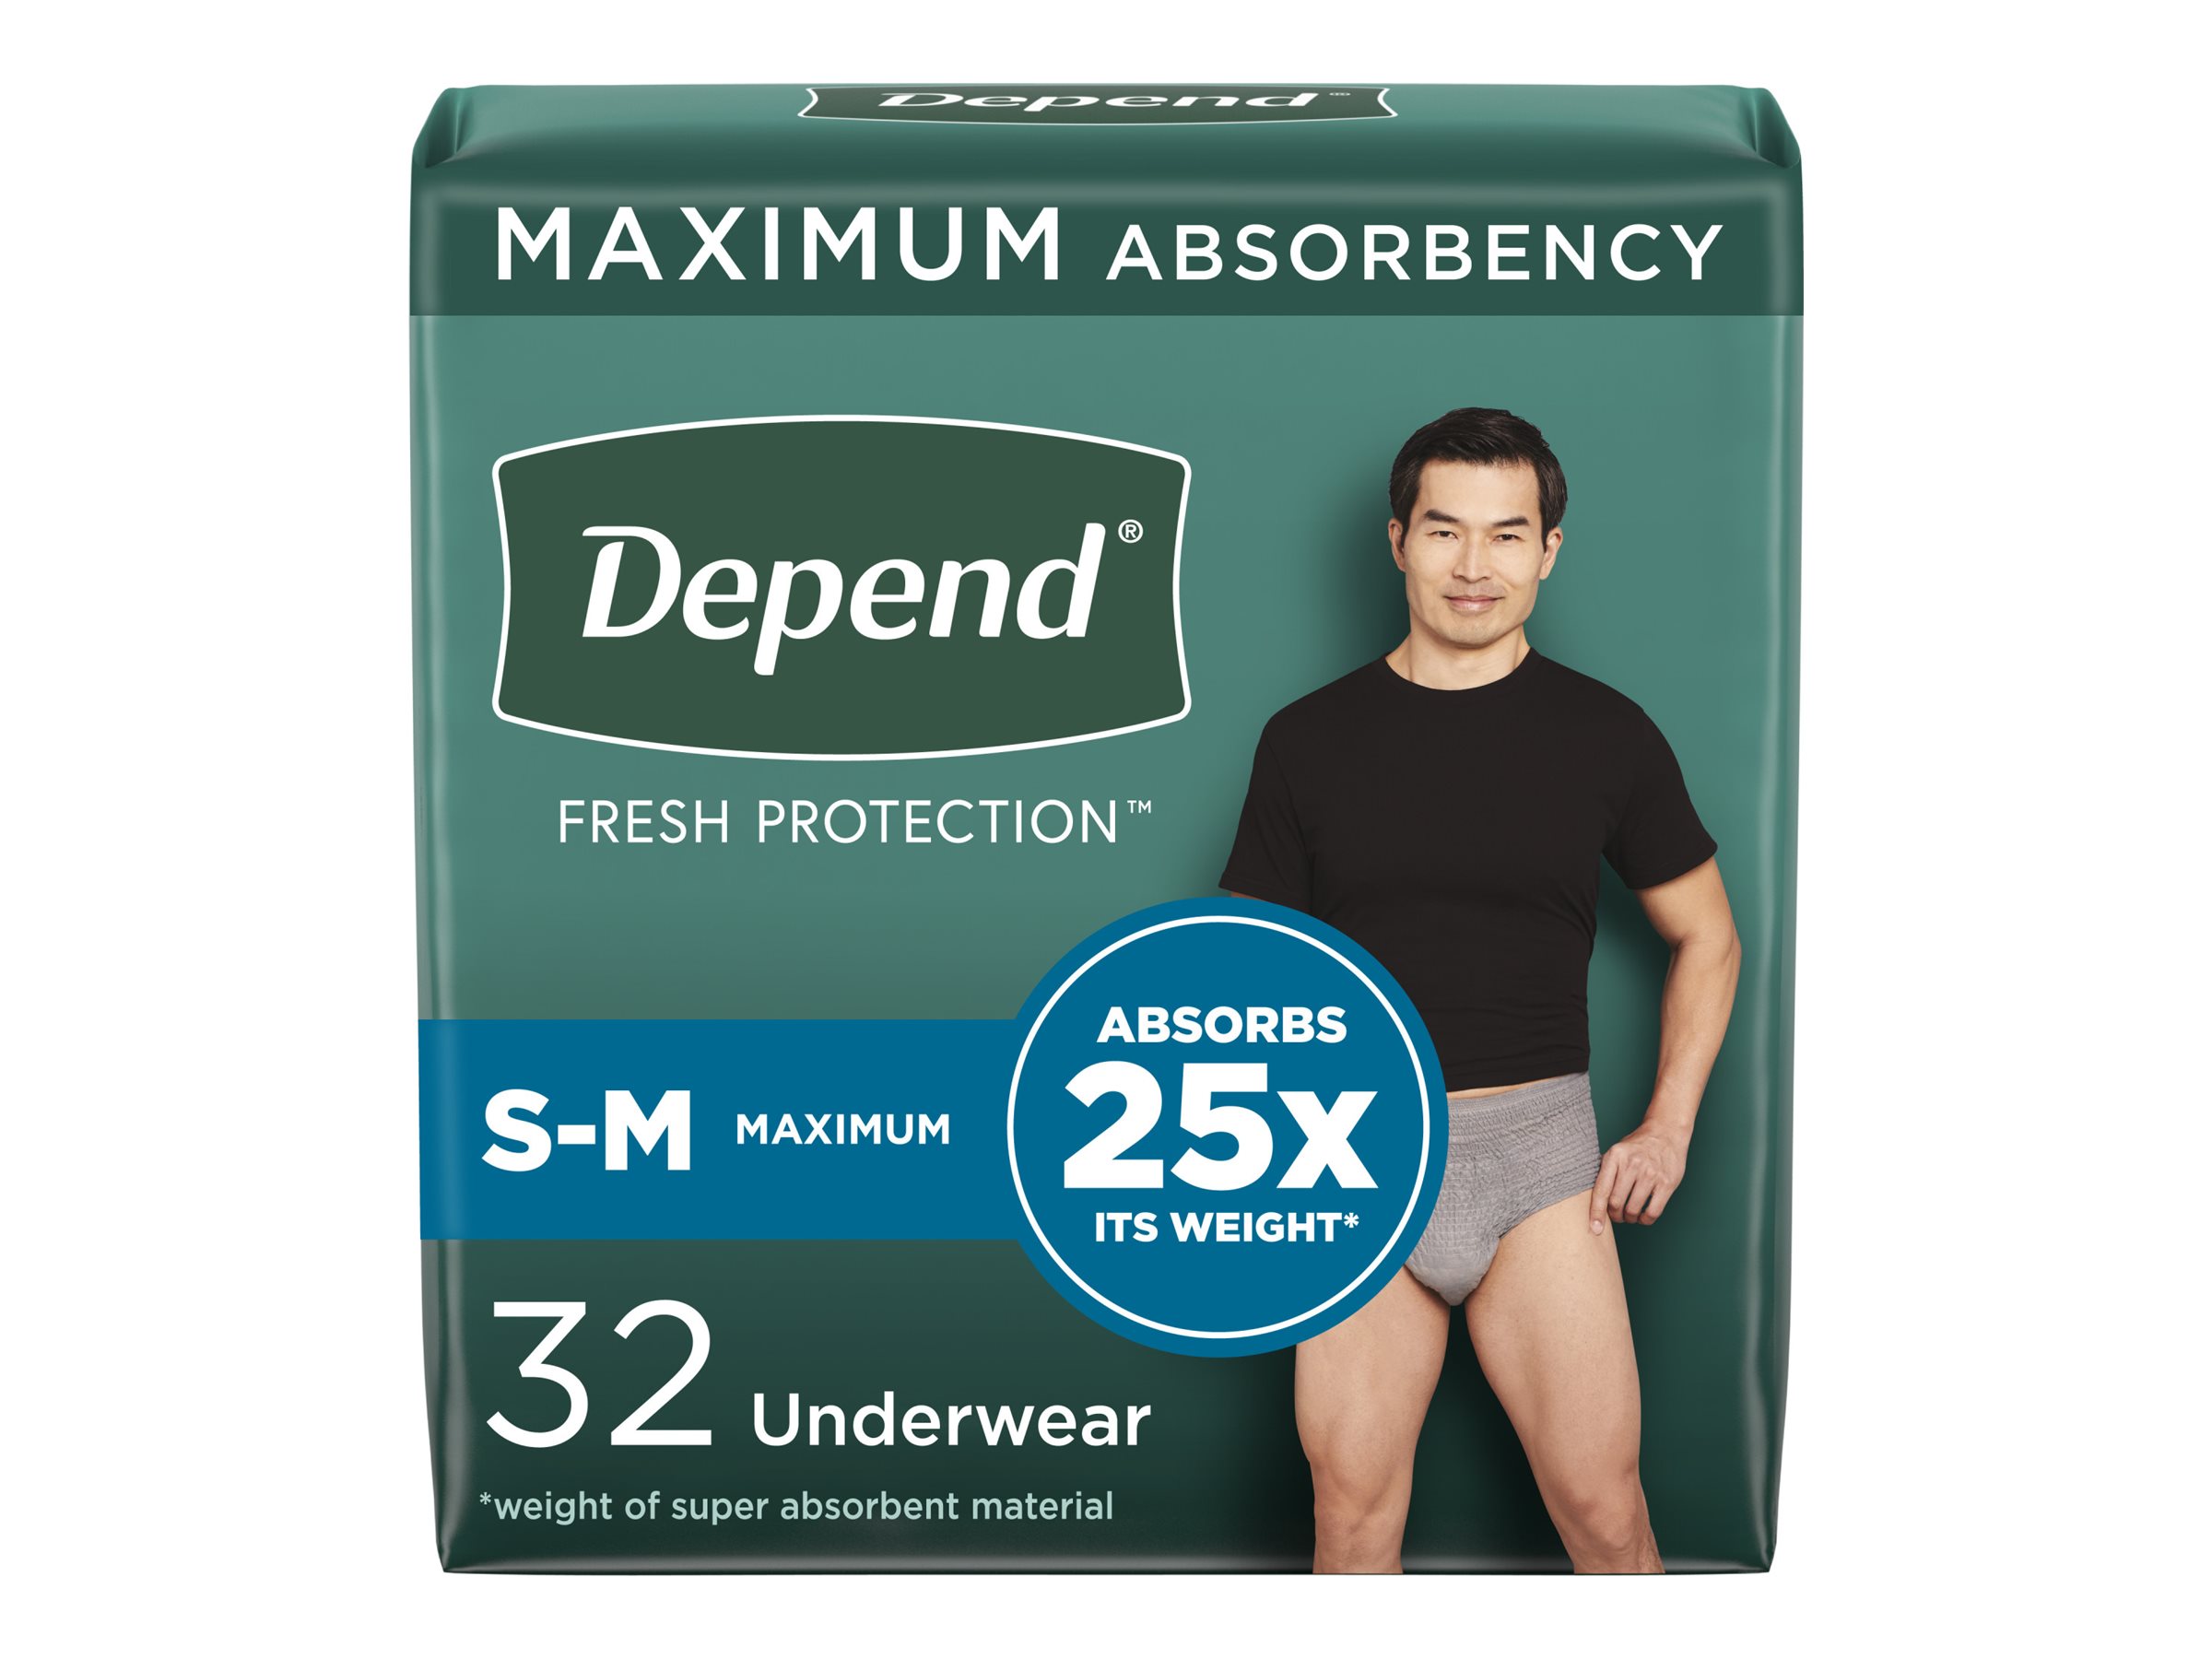 Depend® FIT-FLEX® Underwear for Women - Maximum Absorbency (S/M/L/XL/XXL)